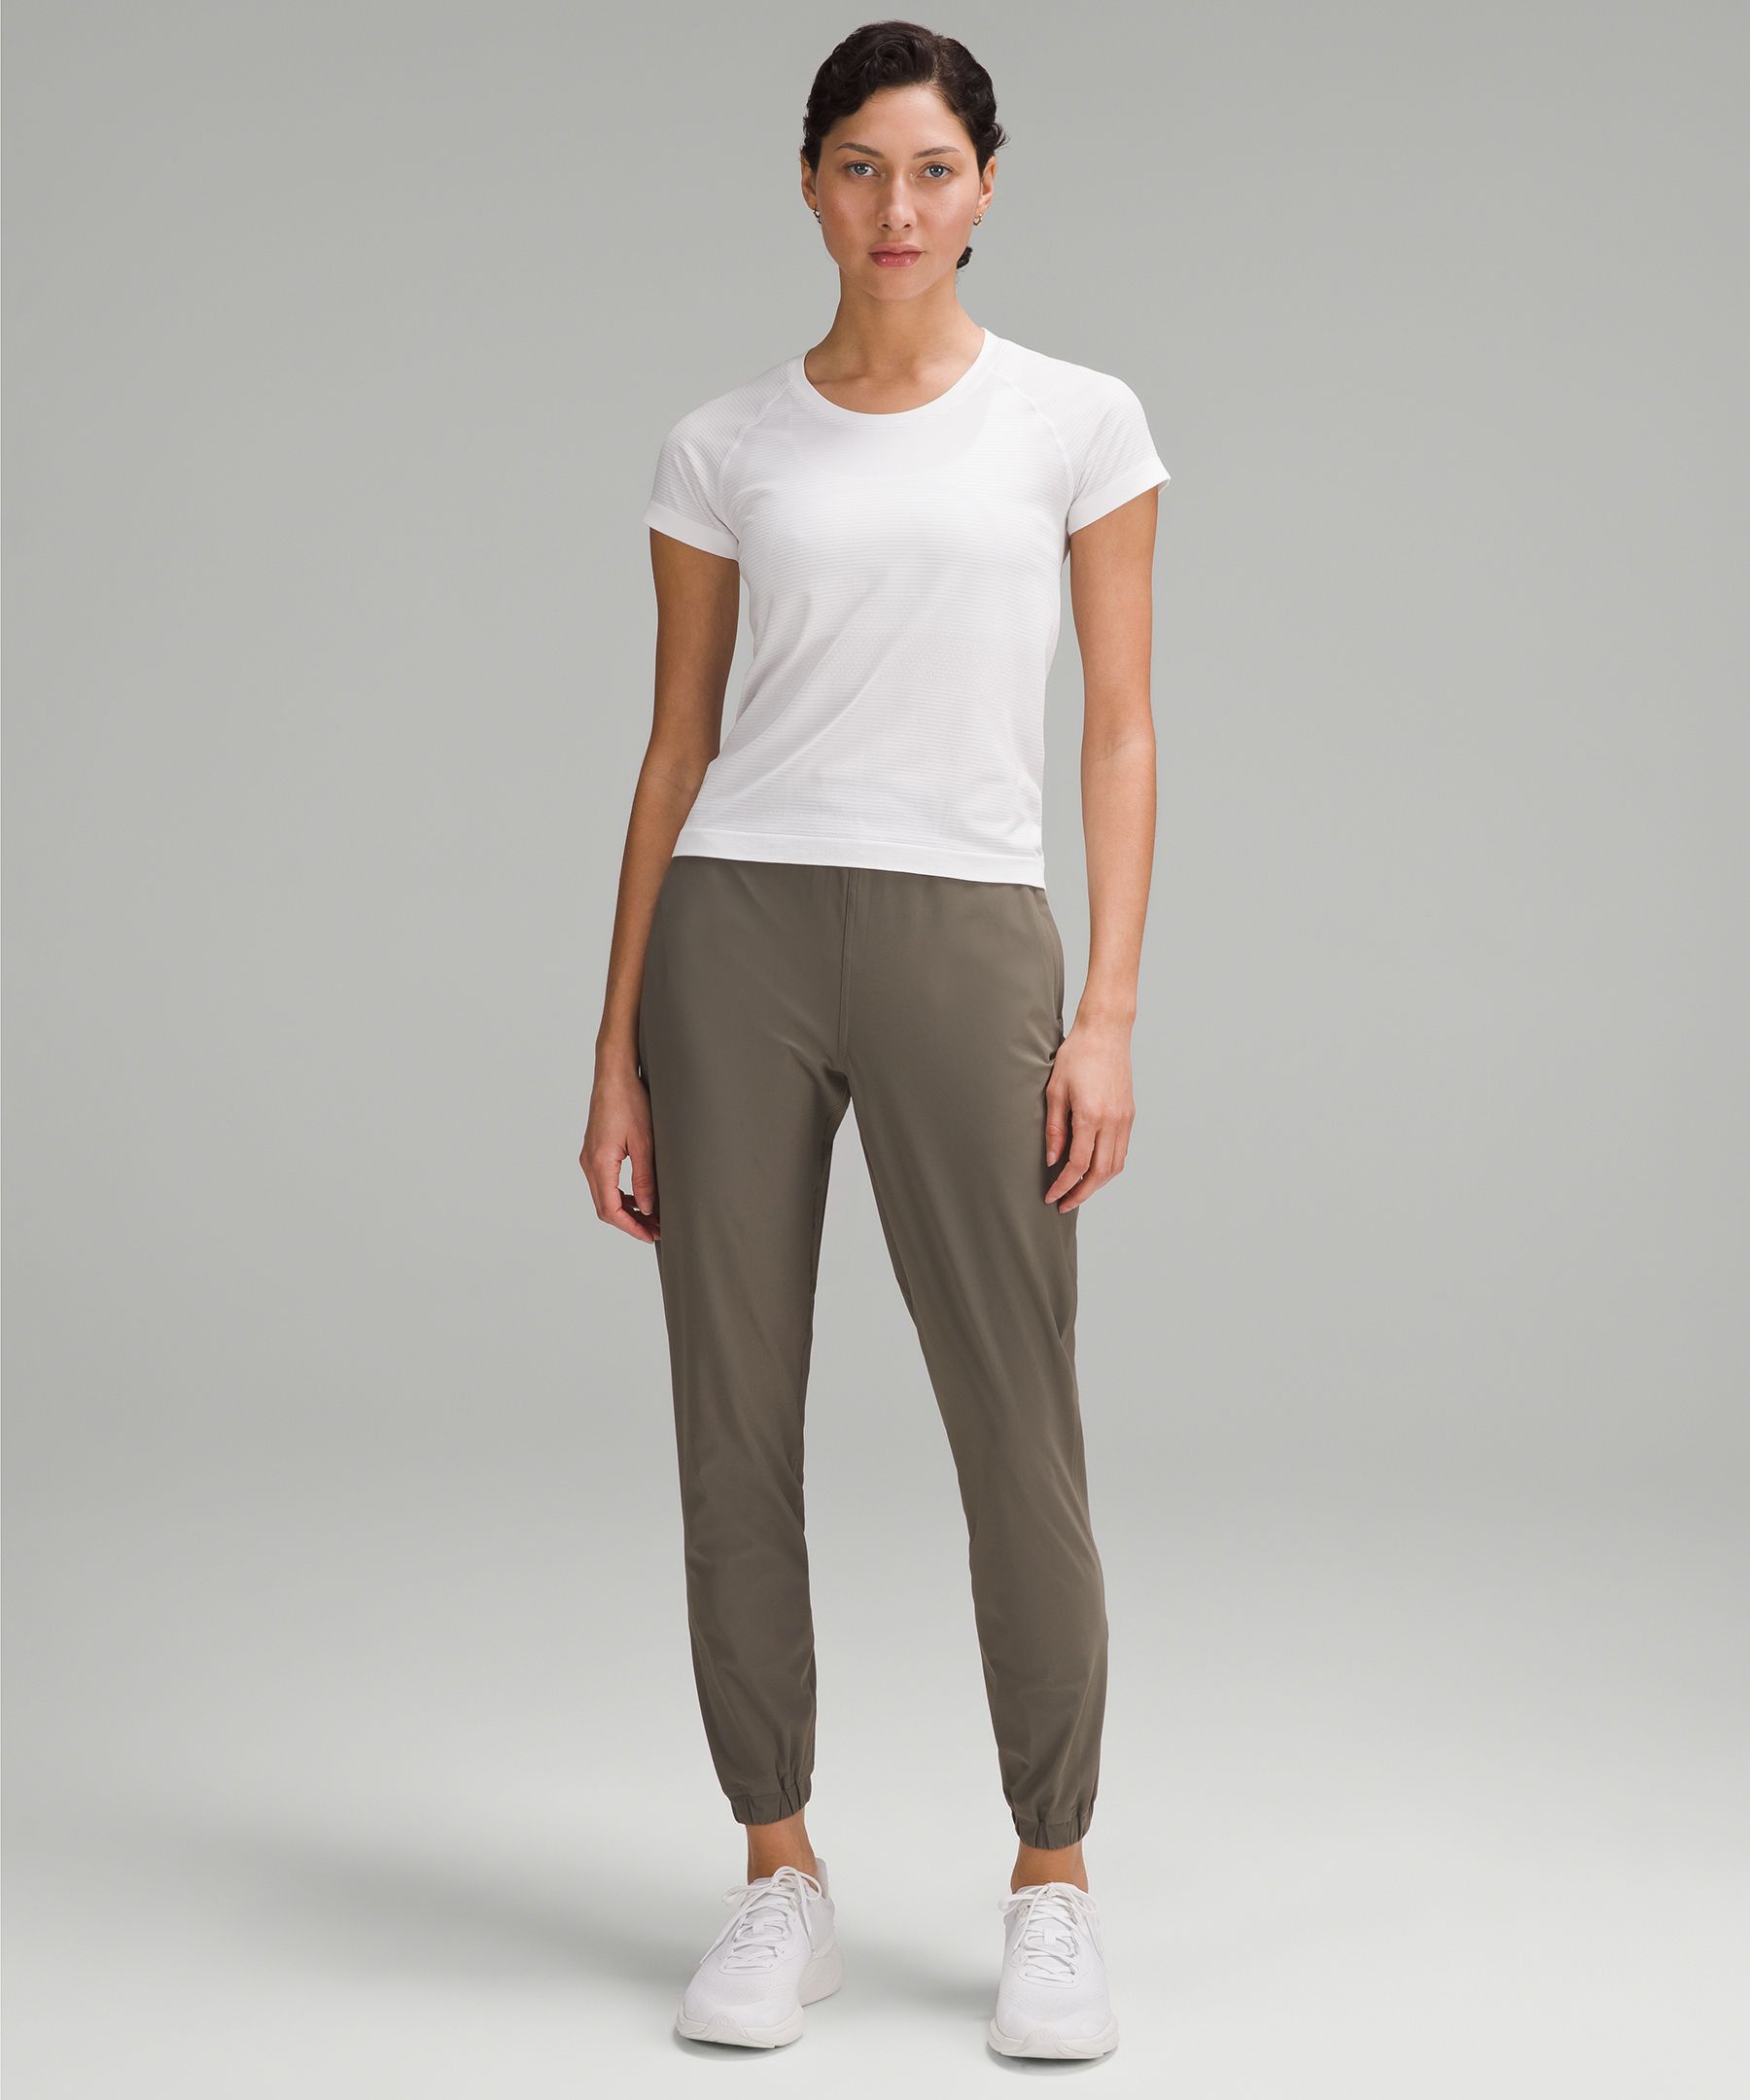 Lululemon Retreat Yourself Women's Gray Copped Pants Lounge Yoga Size 4